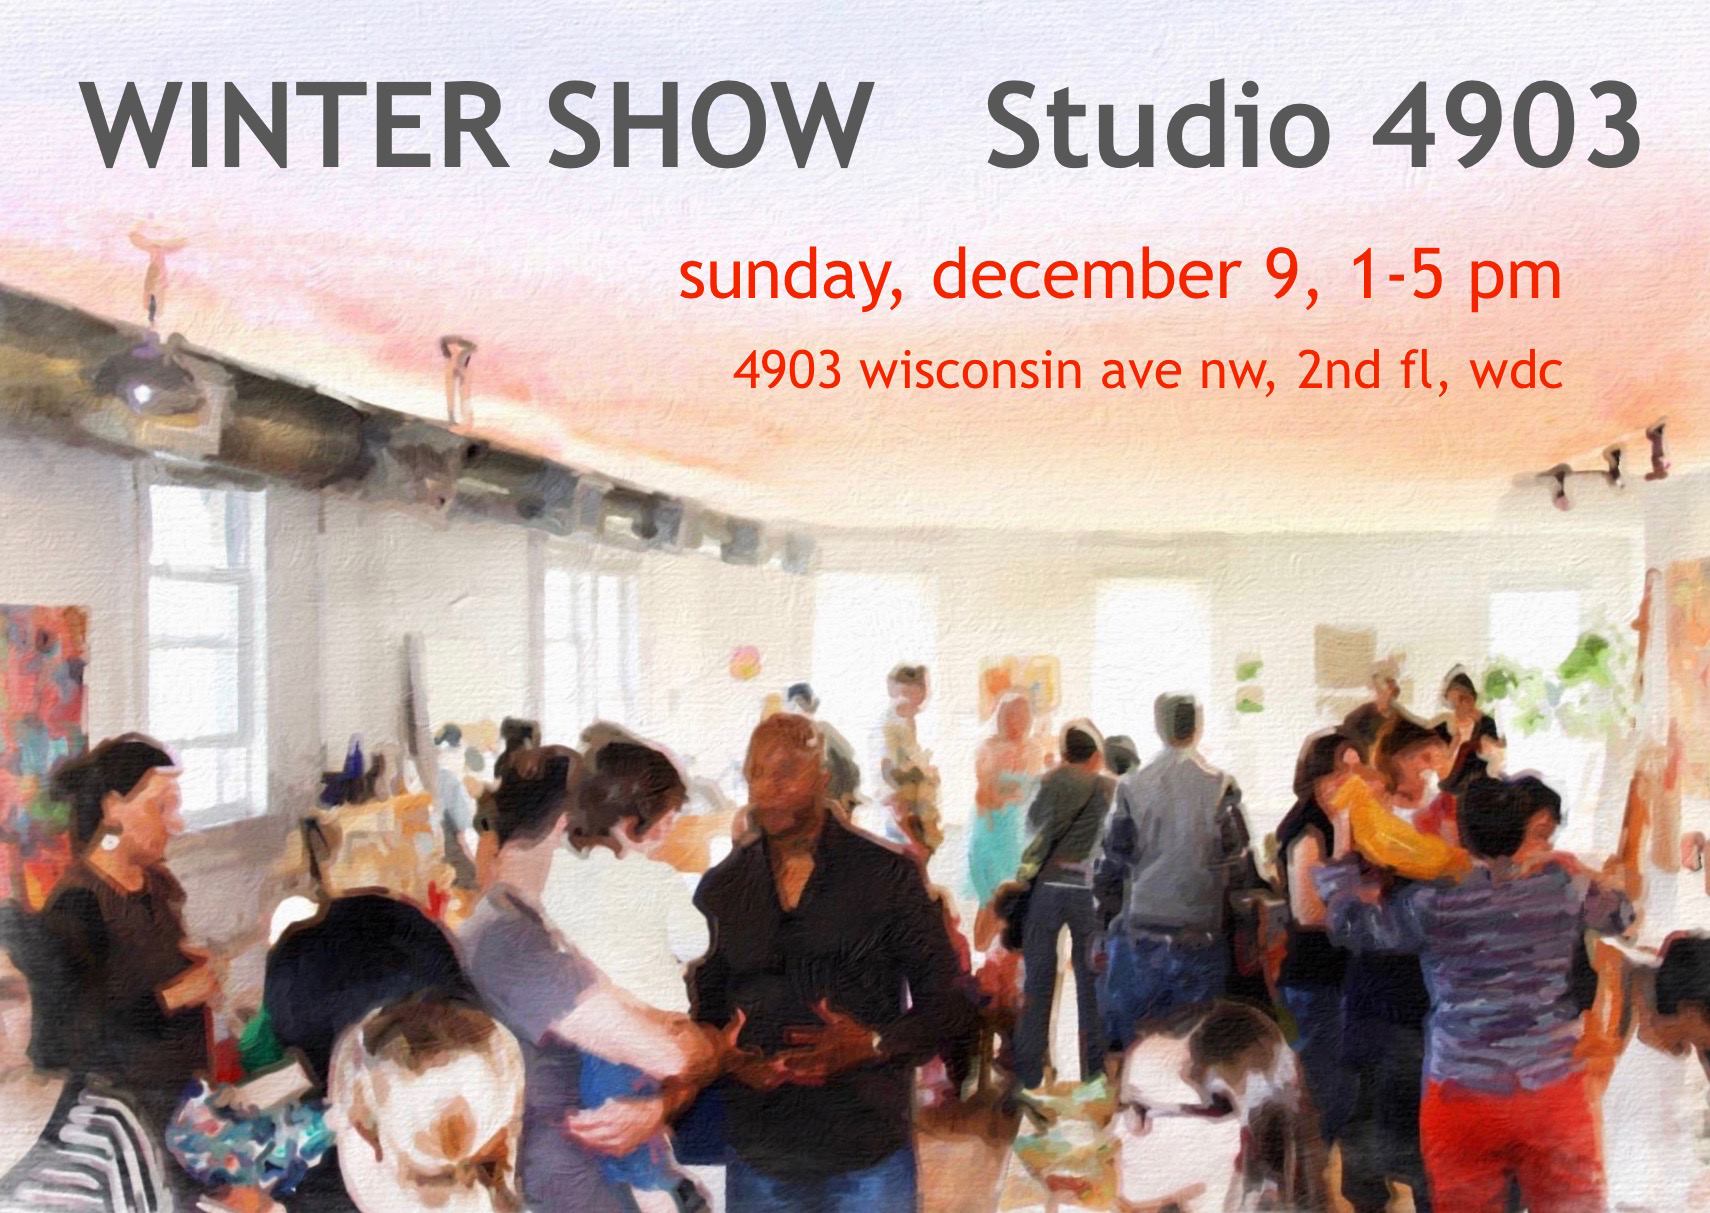 Studio 4903 Winter Show